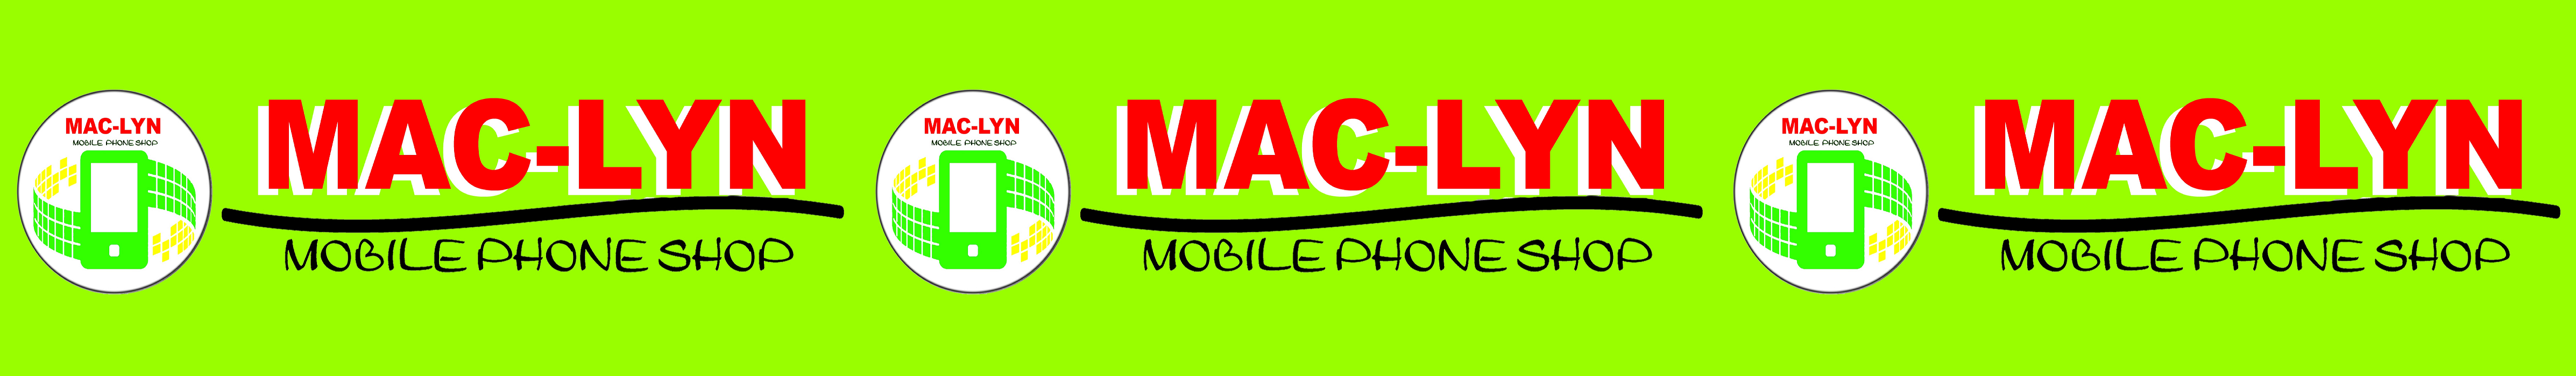 MAC-LYN MOBILE PHONE SHOP